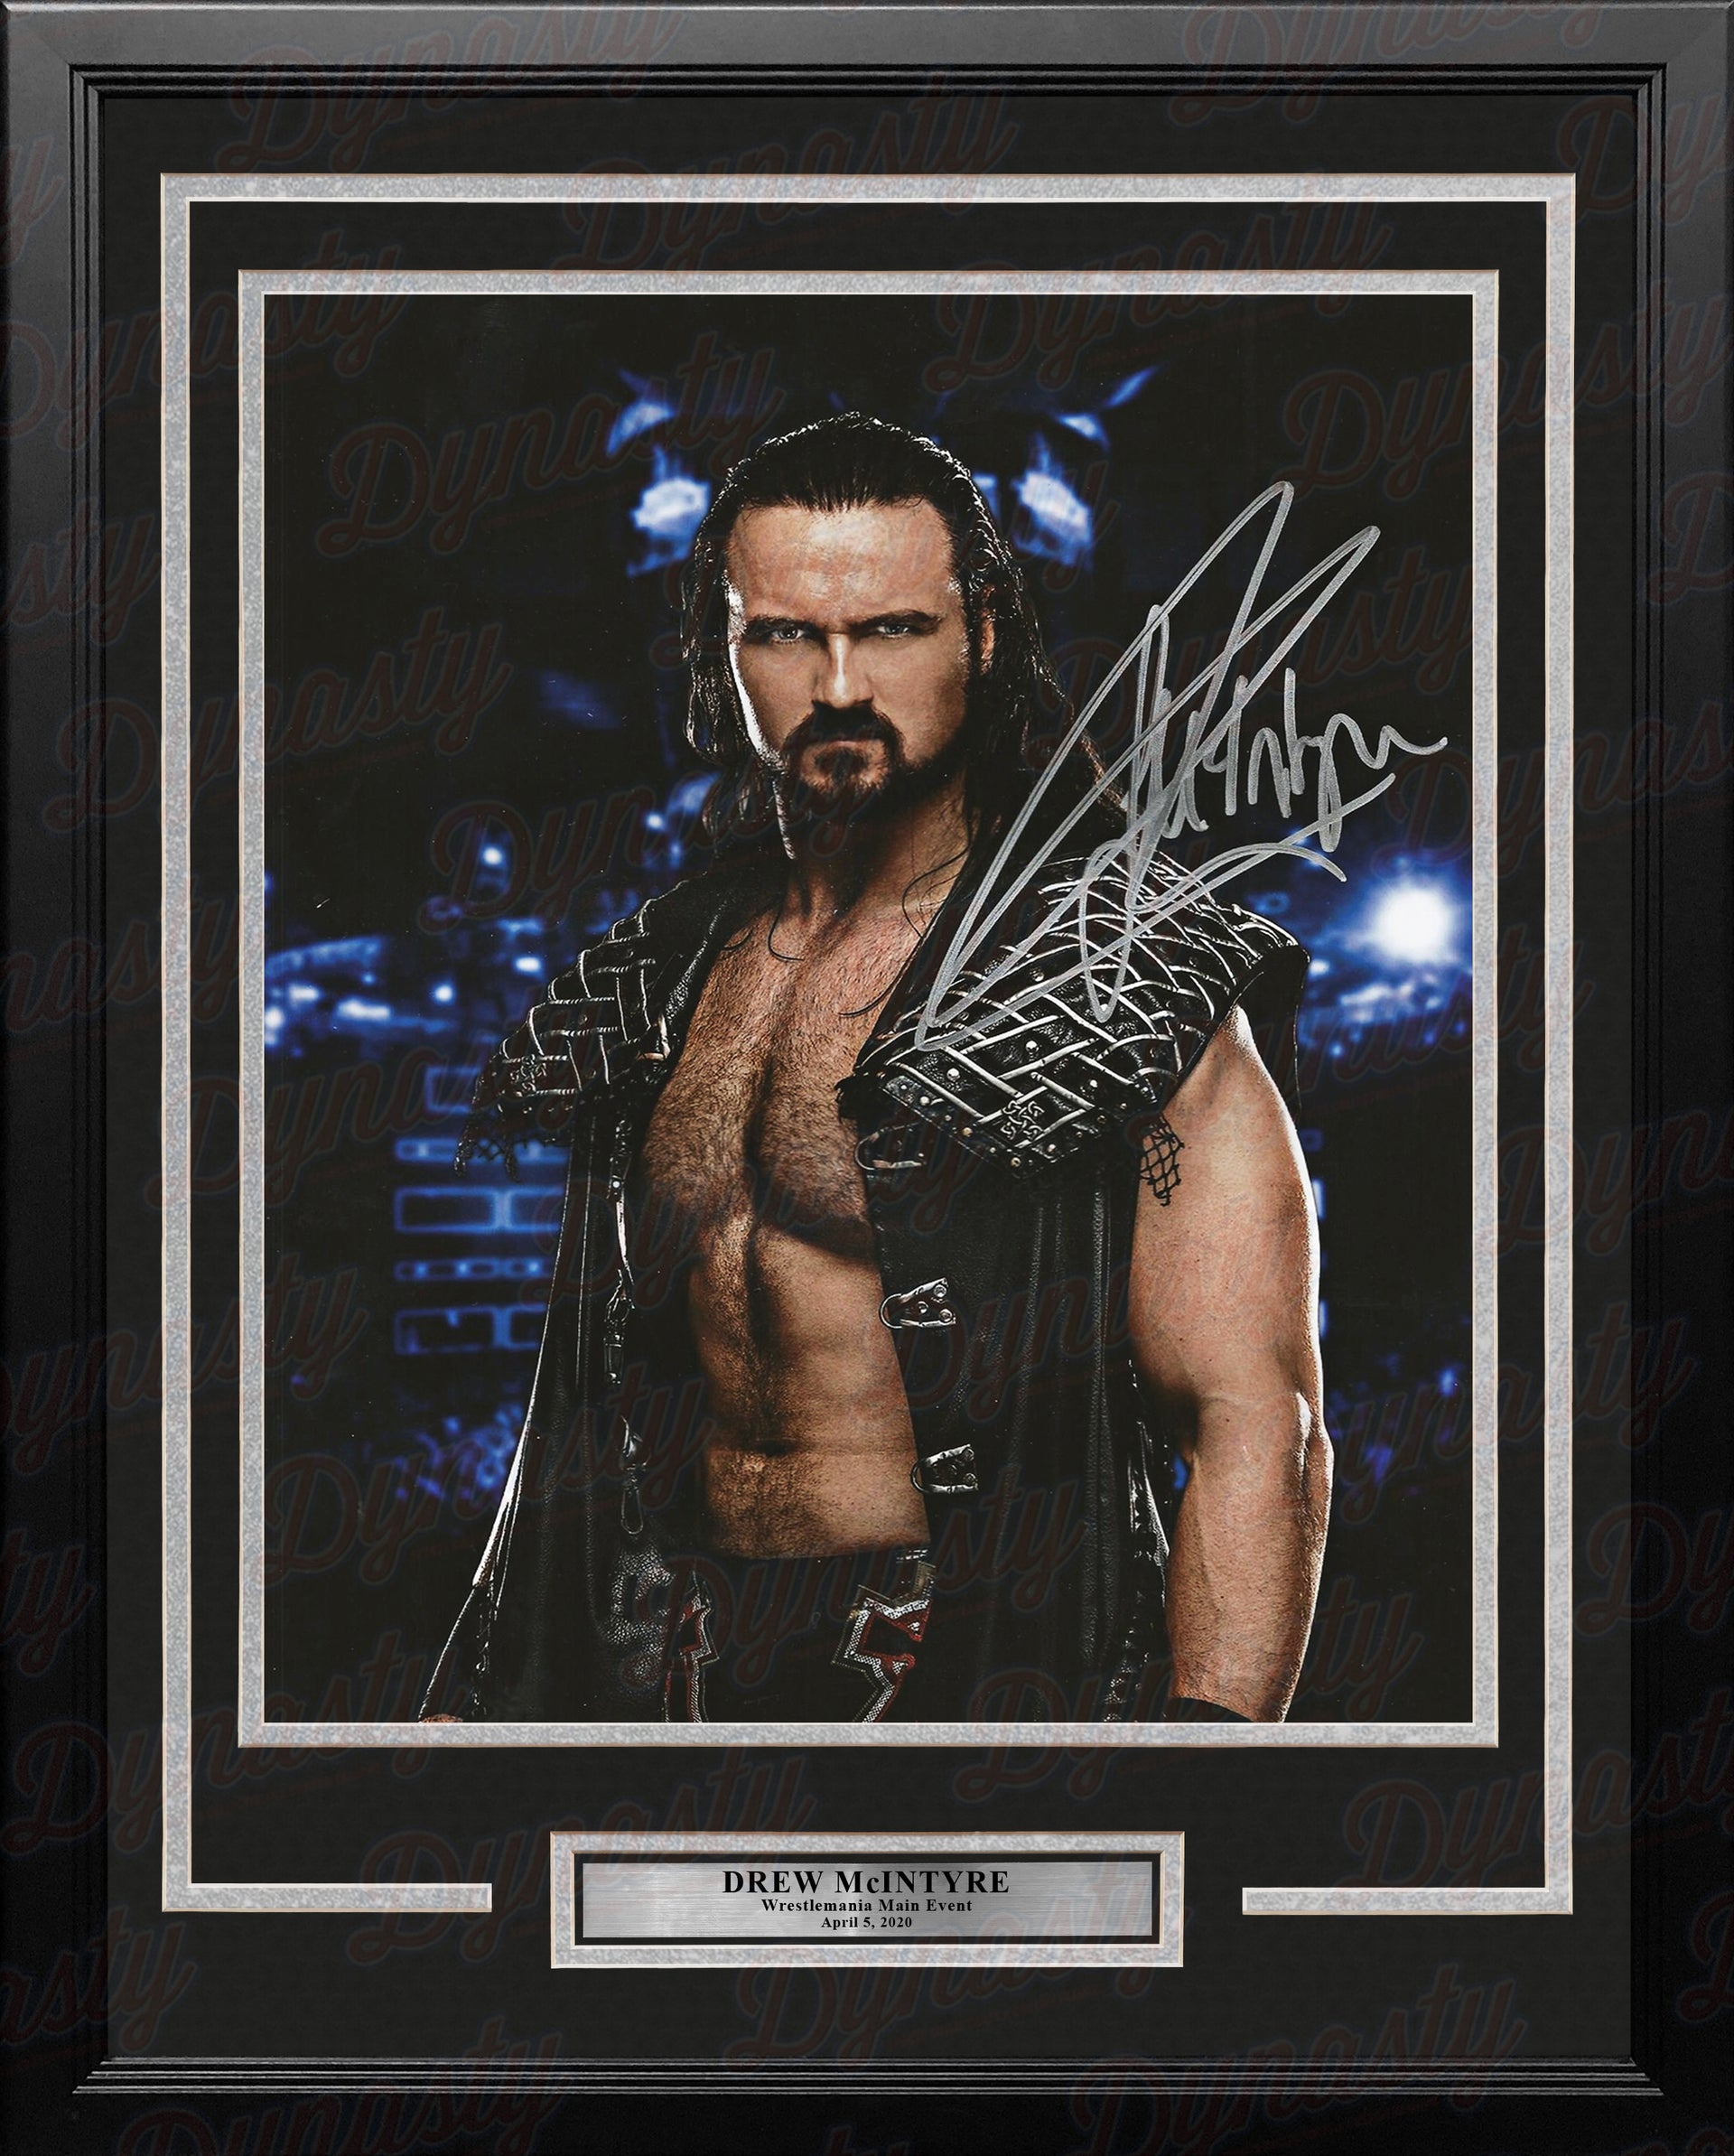 Drew McIntyre Autographed WWE Wrestling Profile 16" x 20" Framed Photo - Dynasty Sports & Framing 